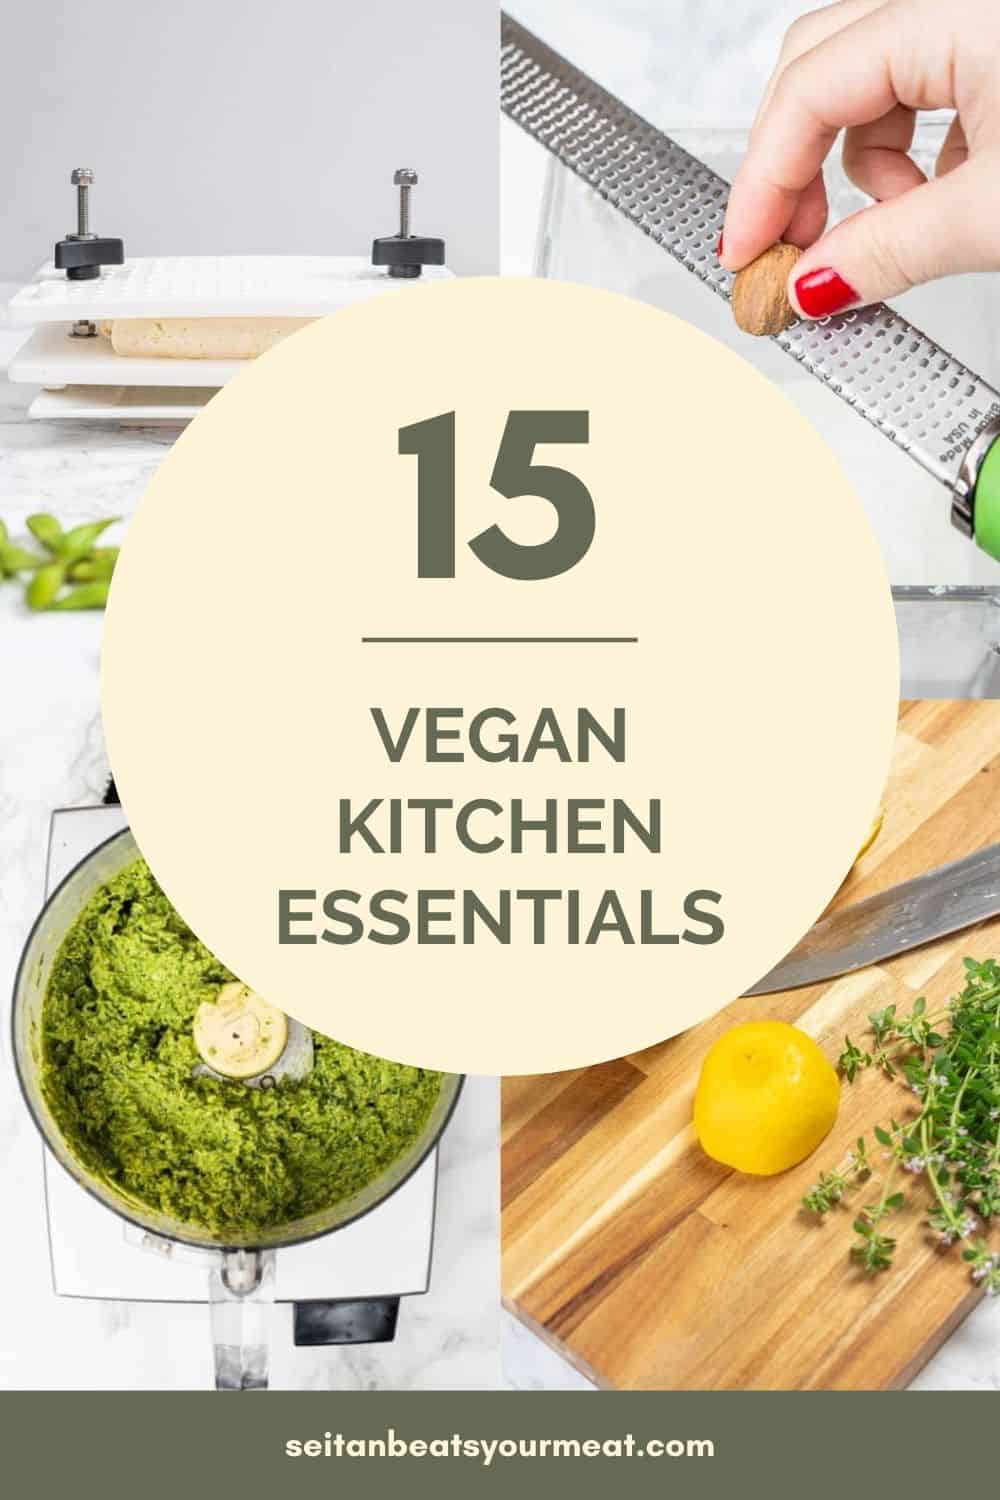 https://seitanbeatsyourmeat.com/wp-content/uploads/2022/01/vegan-kitchen-essentials-pin.jpg